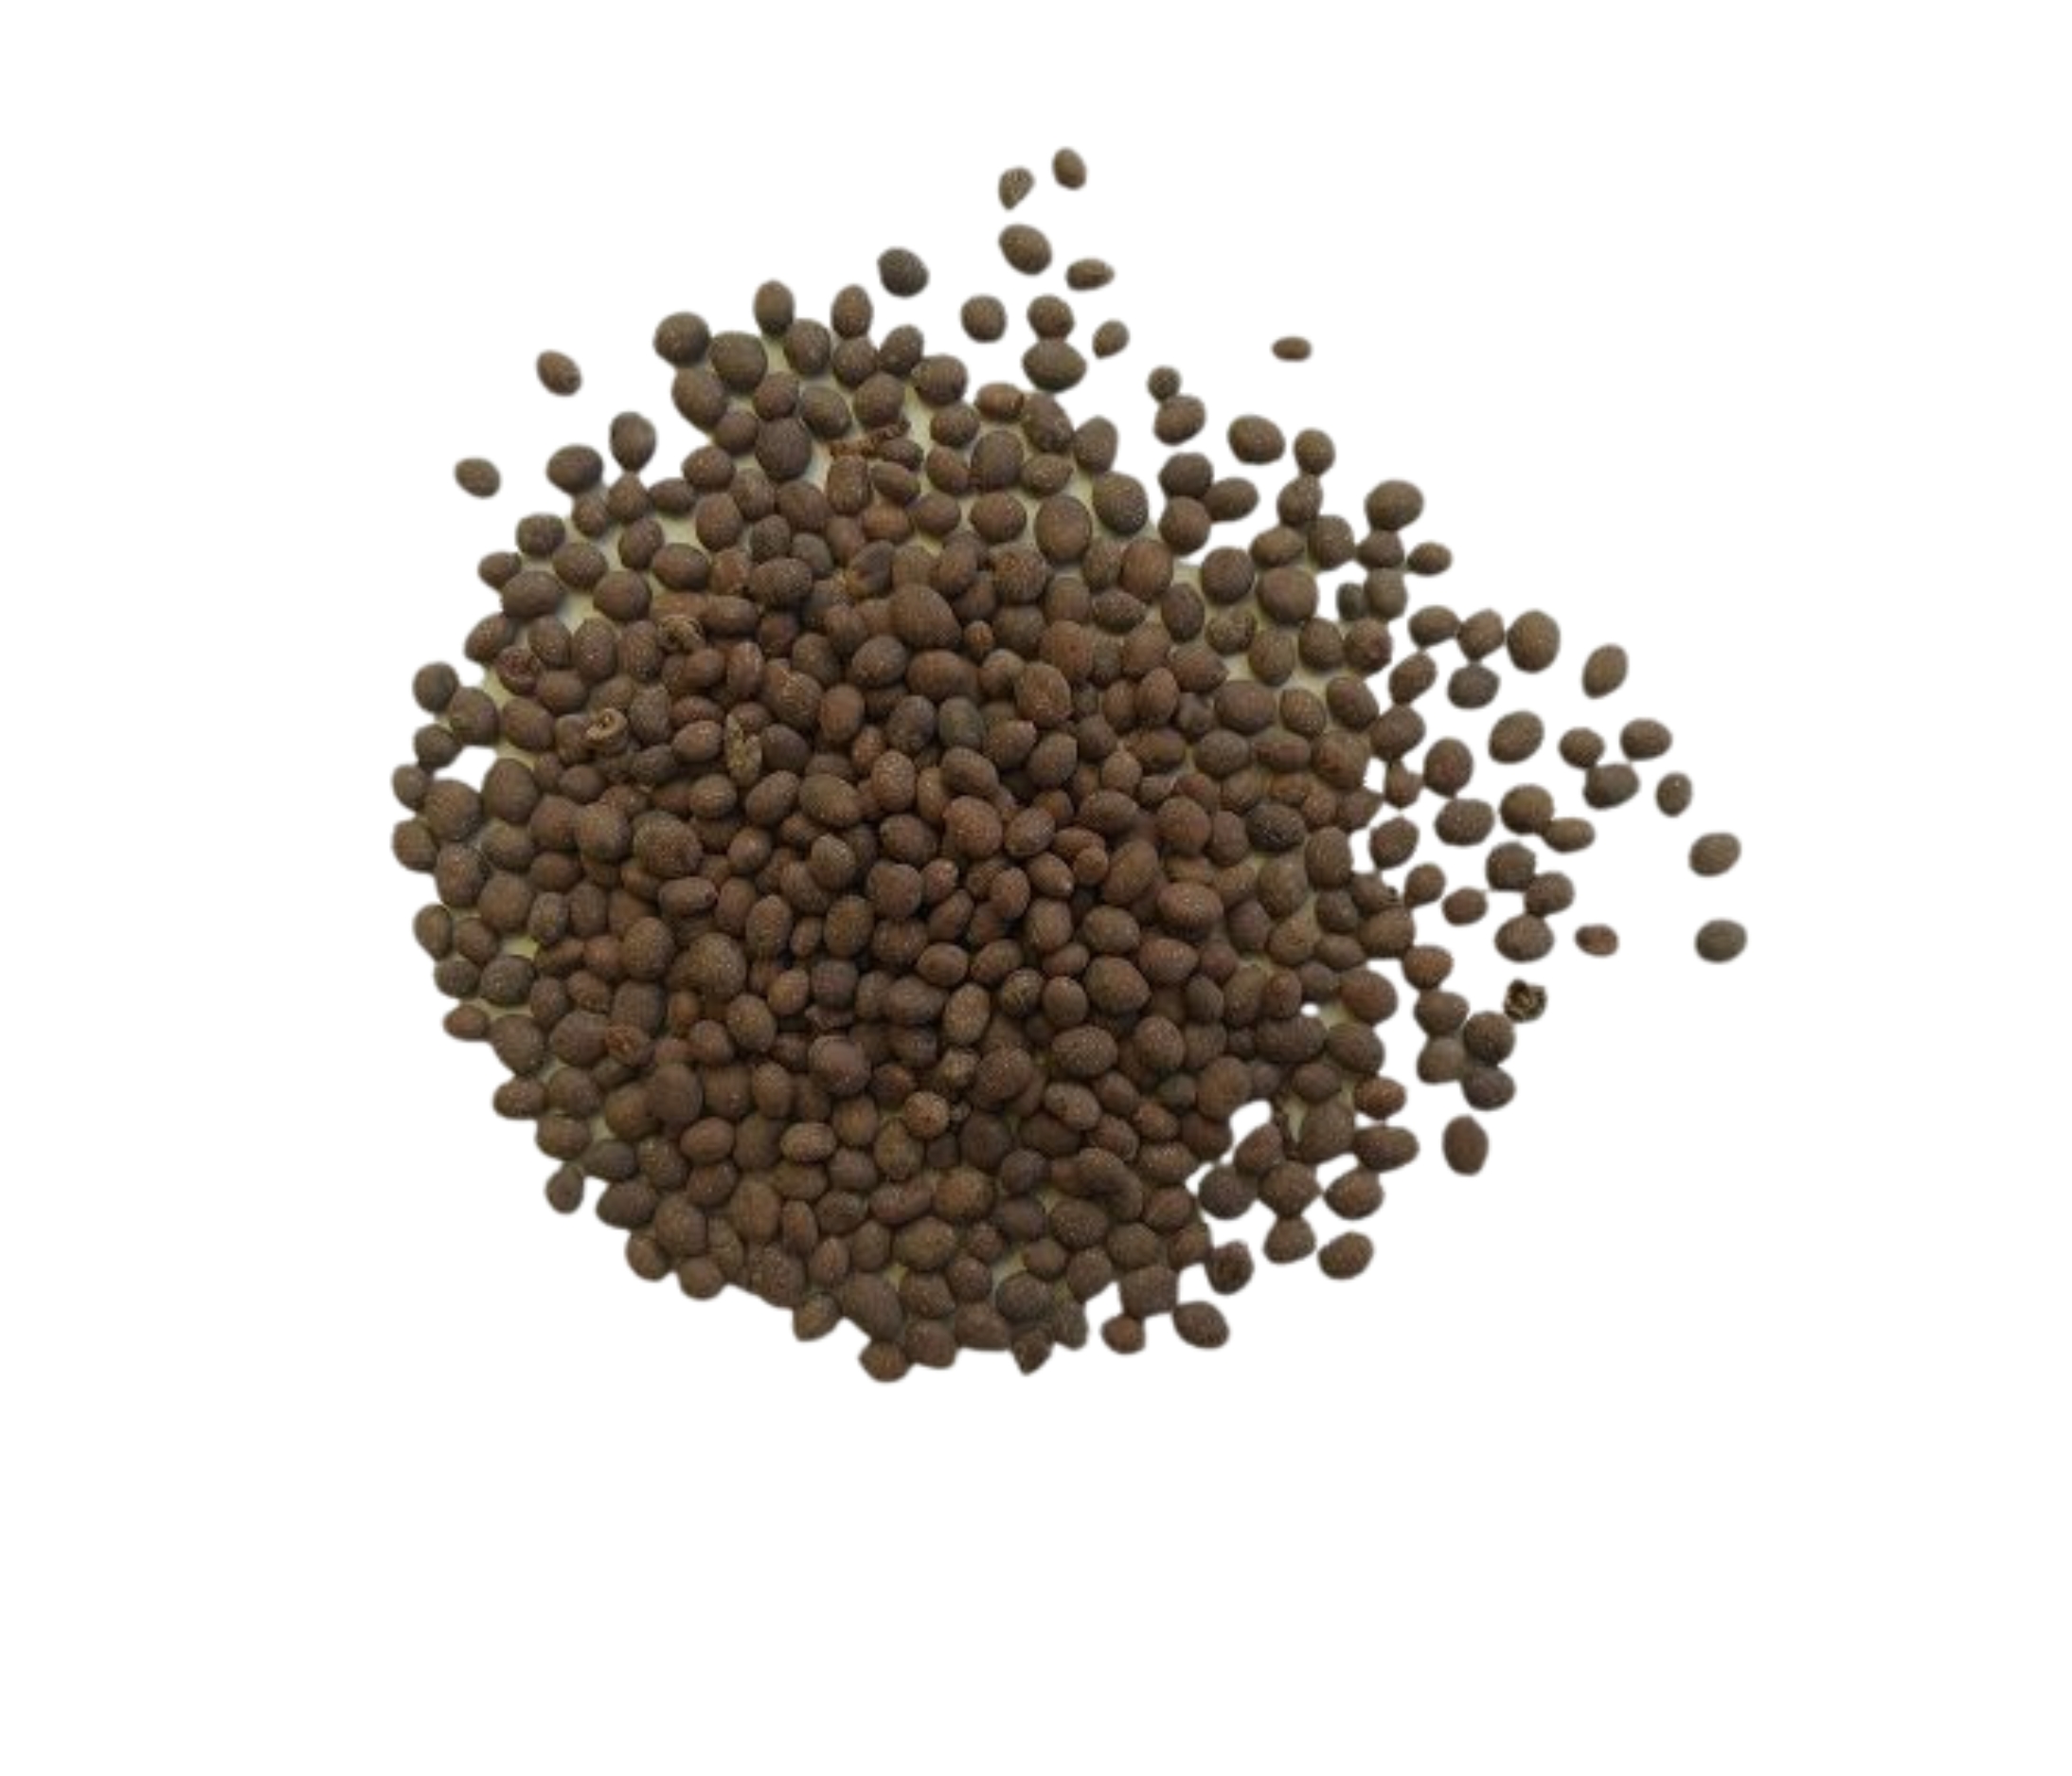 antirrhinum-palette-seeds-per-package-1000-pcs